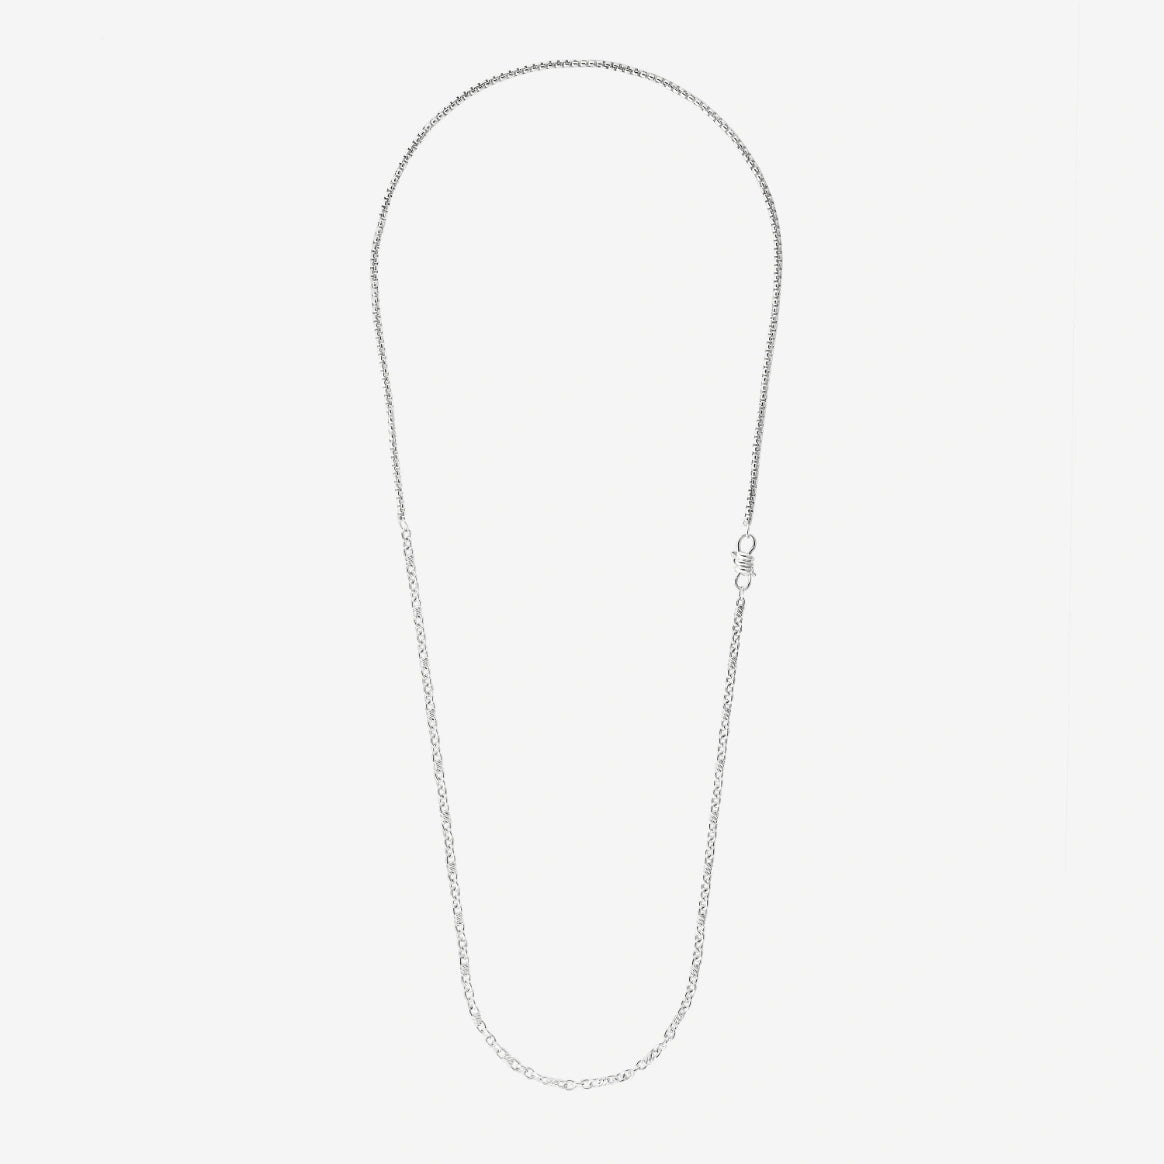 DoDo Necklace Nodo Silver with Knot Clasp 75cm - Orsini Jewellers